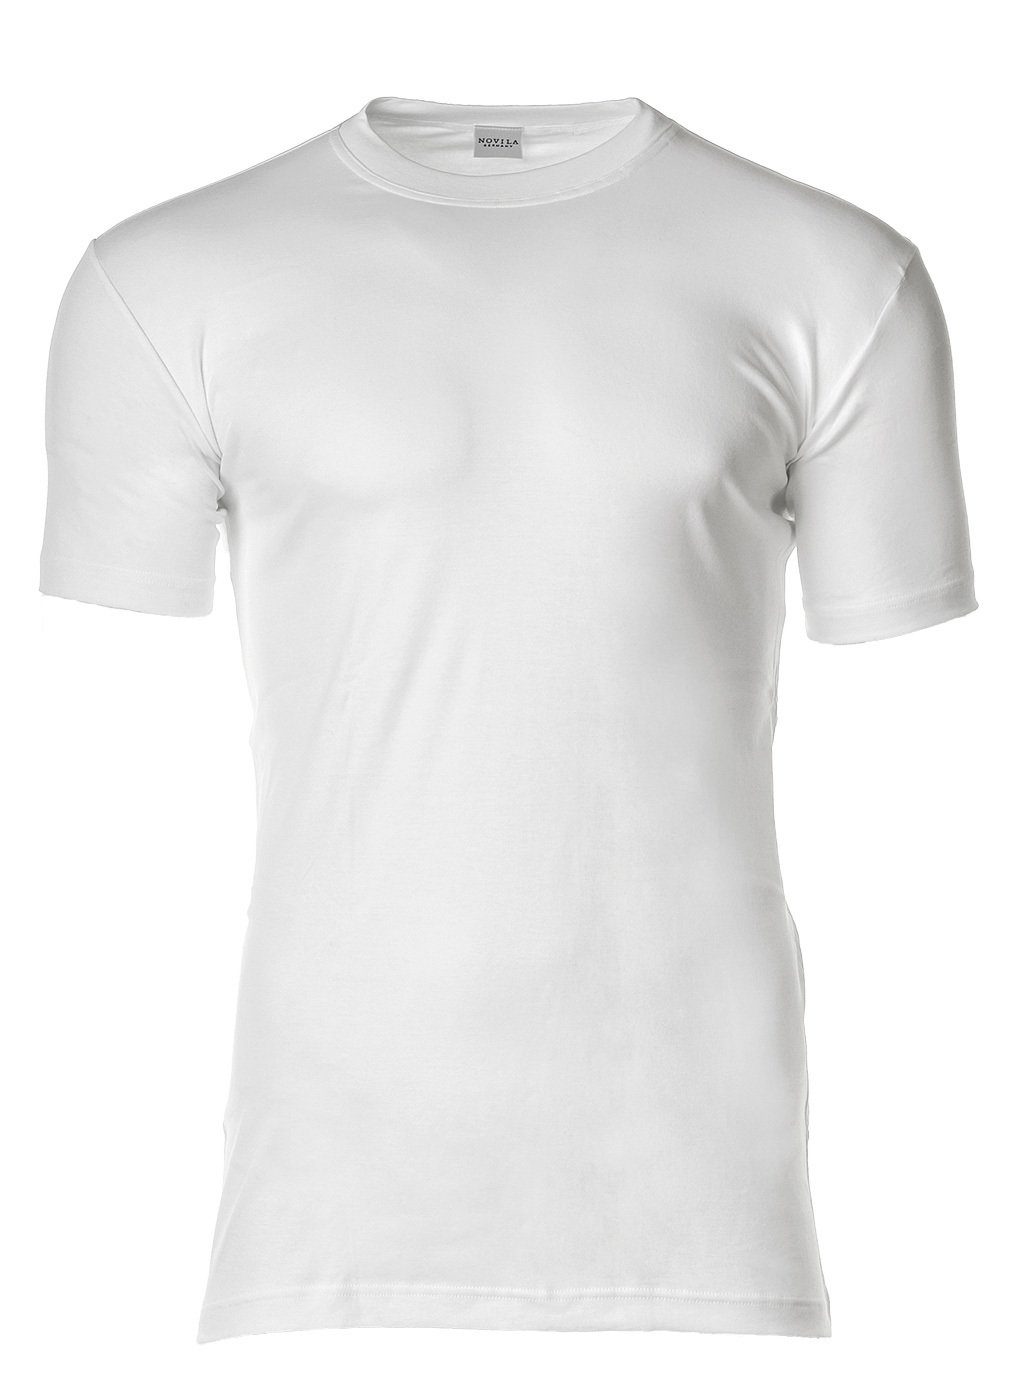 Novila T-Shirt Herren American-Shirt - Rundhals, Natural Comfort Weiß